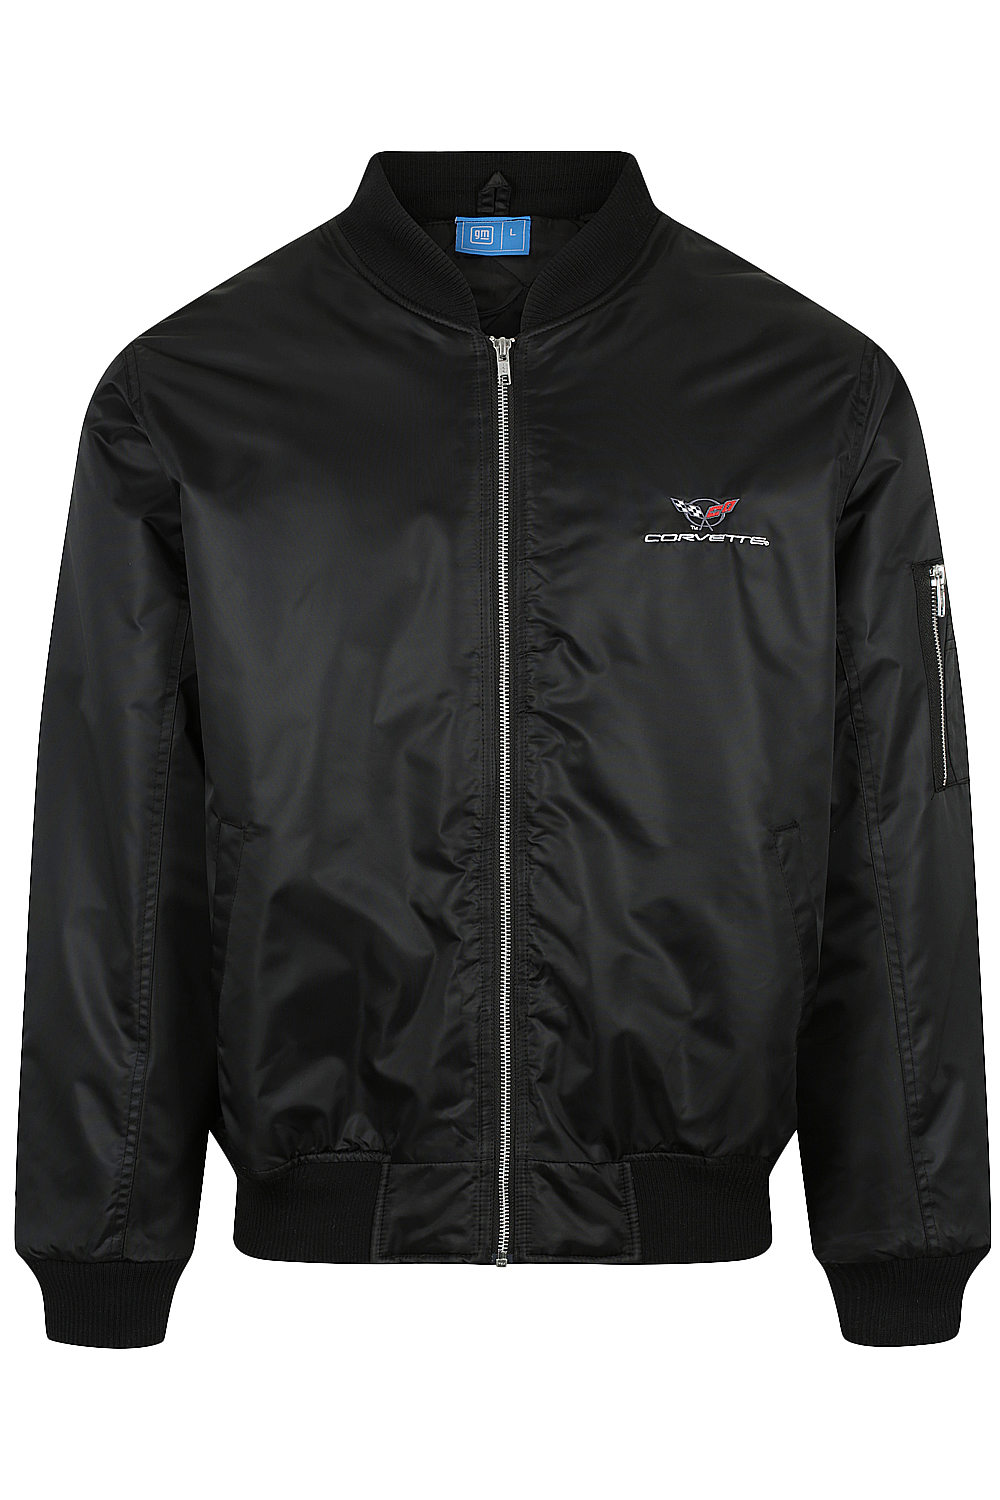 Corvette Black Aviator Jacket – The Distributor Company